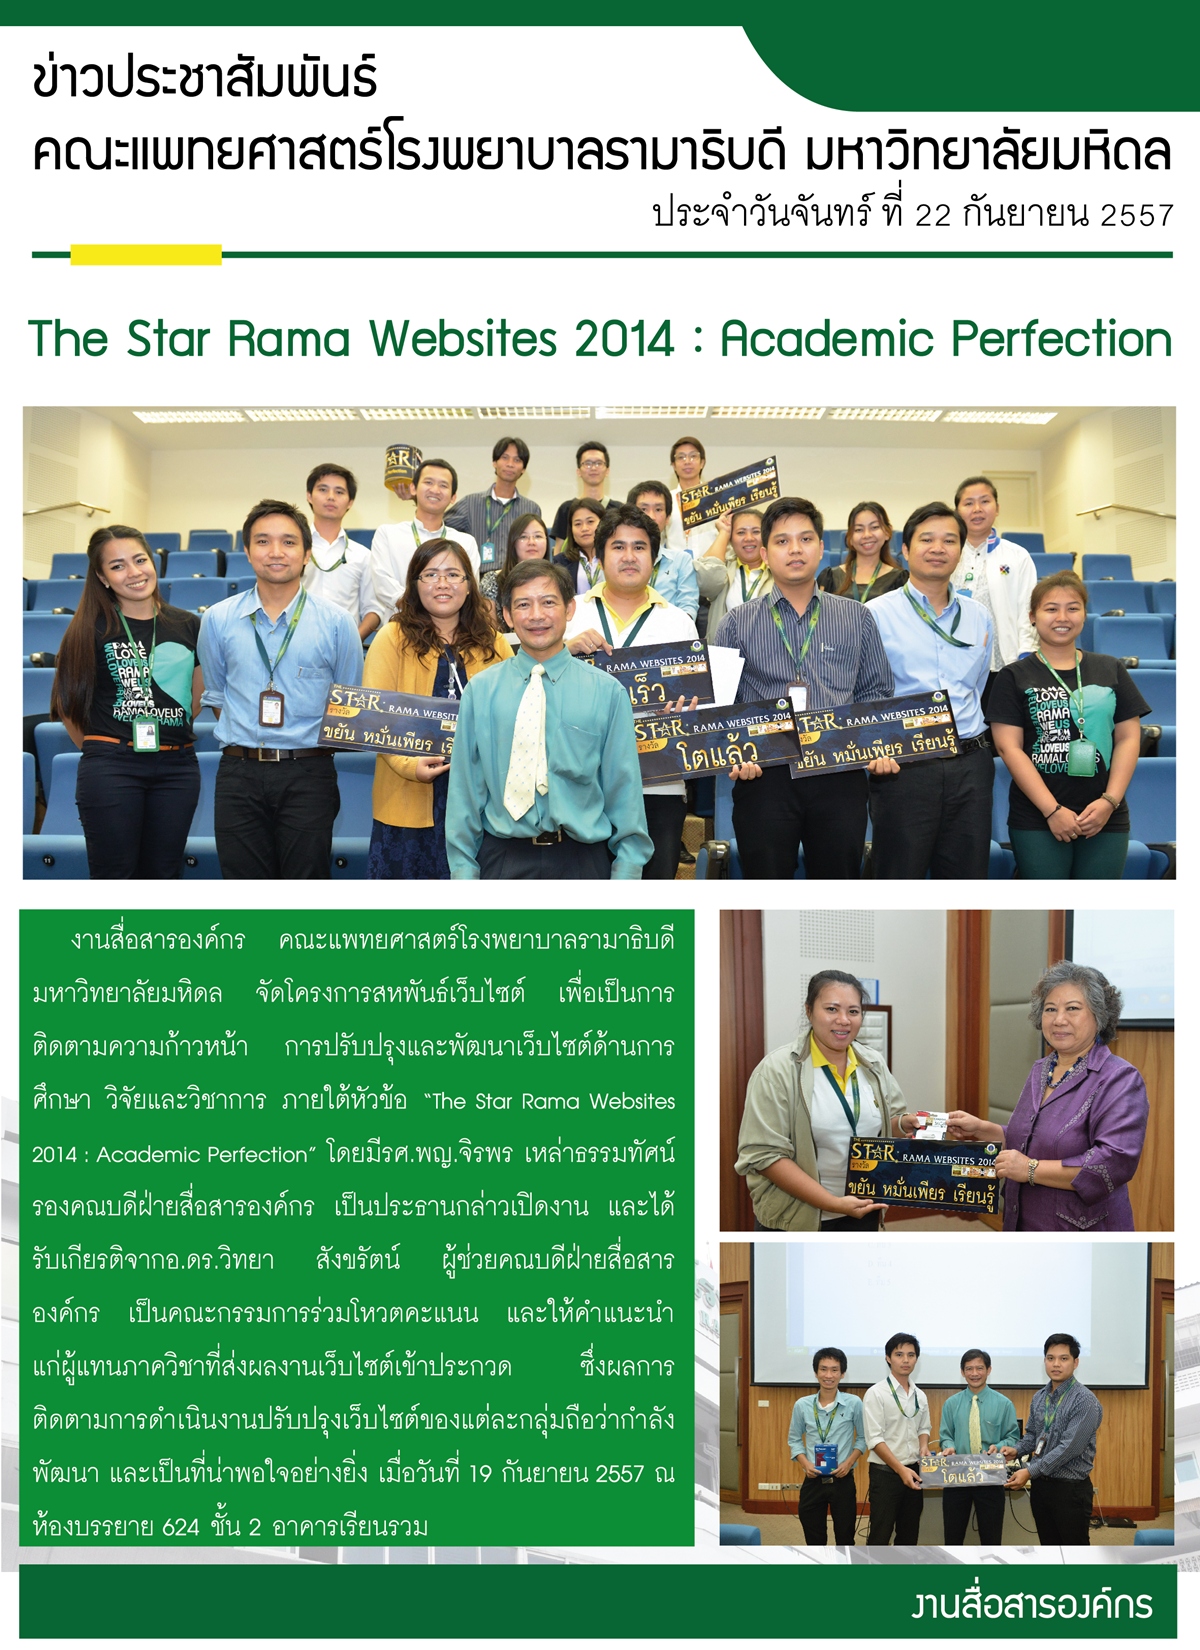 The Star Rama Websites 2014:Academic Perfection